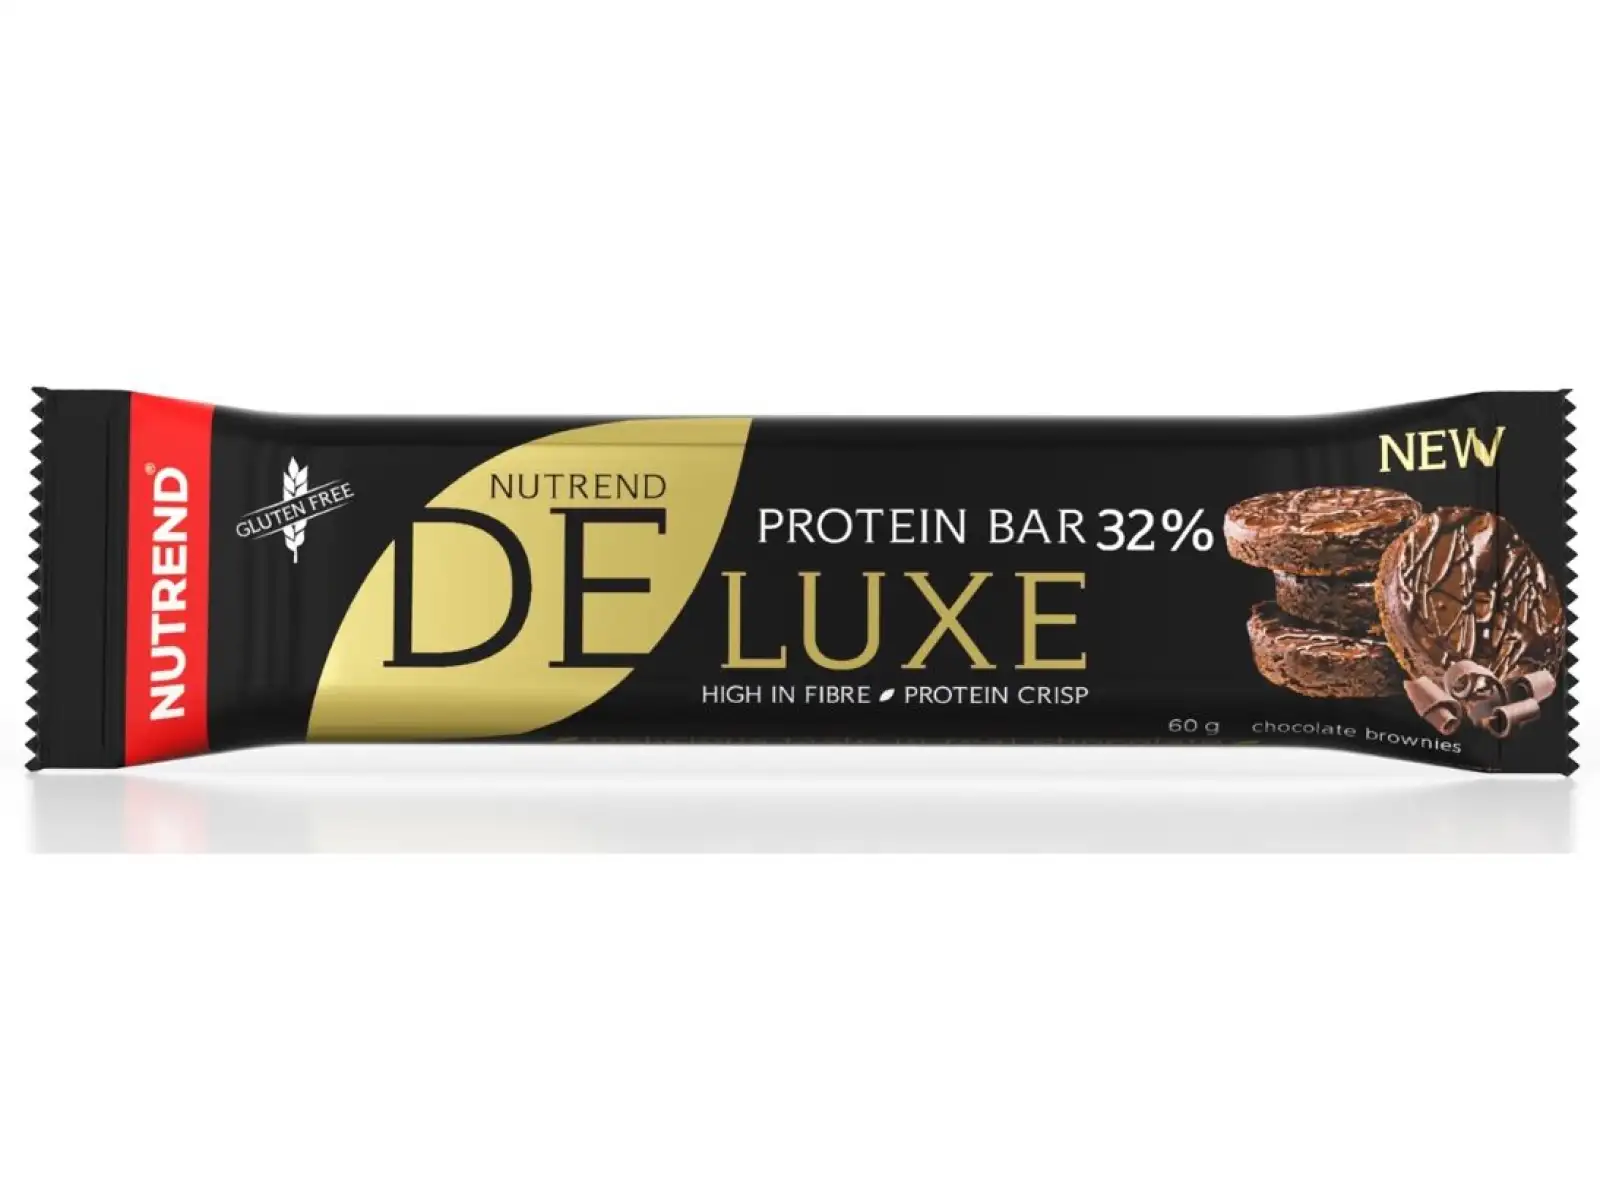 Nutrend Deluxe Protein Bar 60g čokoládové brownies